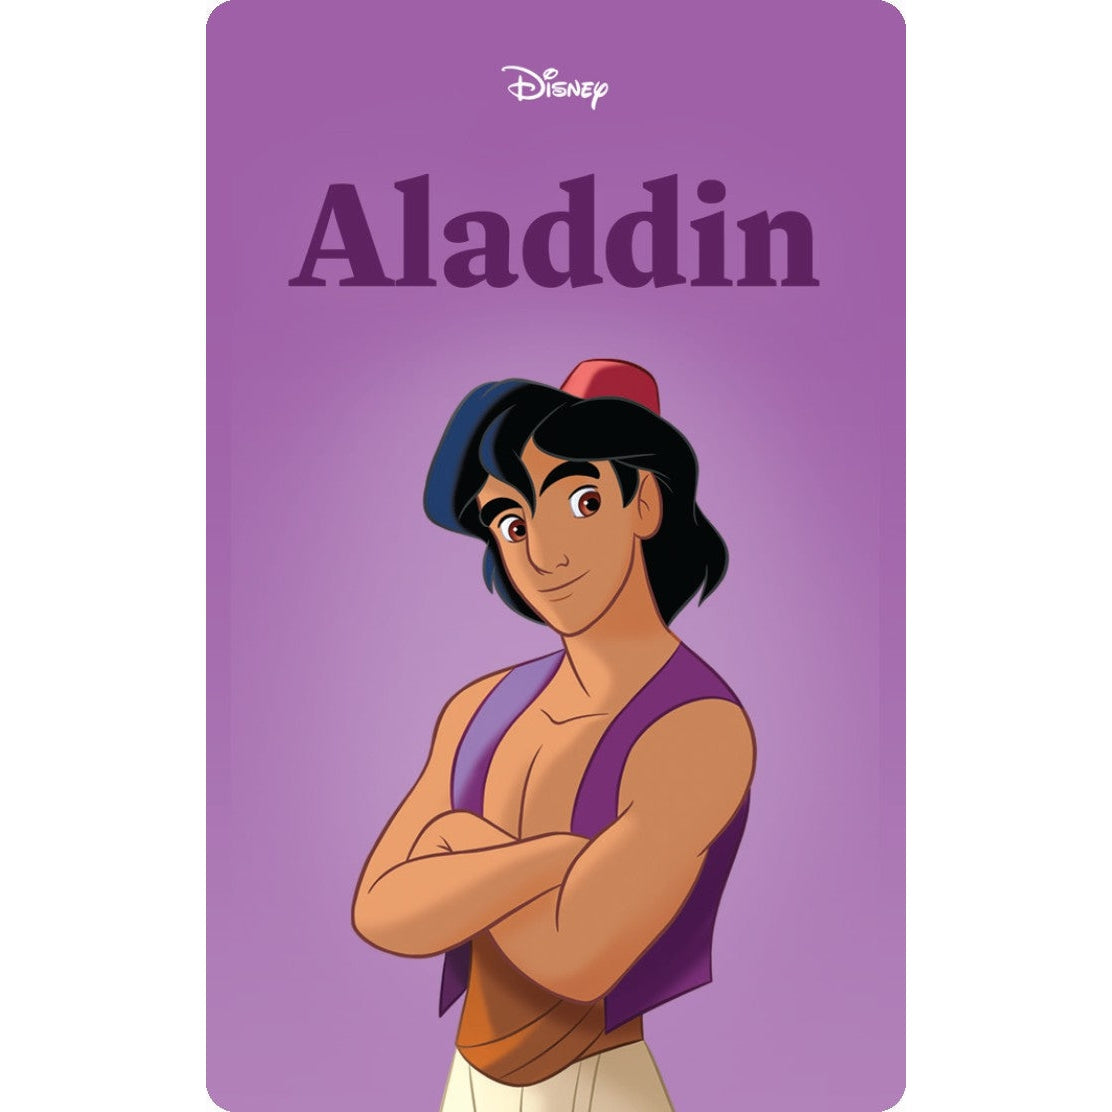 Yoto Card - Disney Classics: Aladdin - Child Friendly Audio Story Card for the Yoto Player